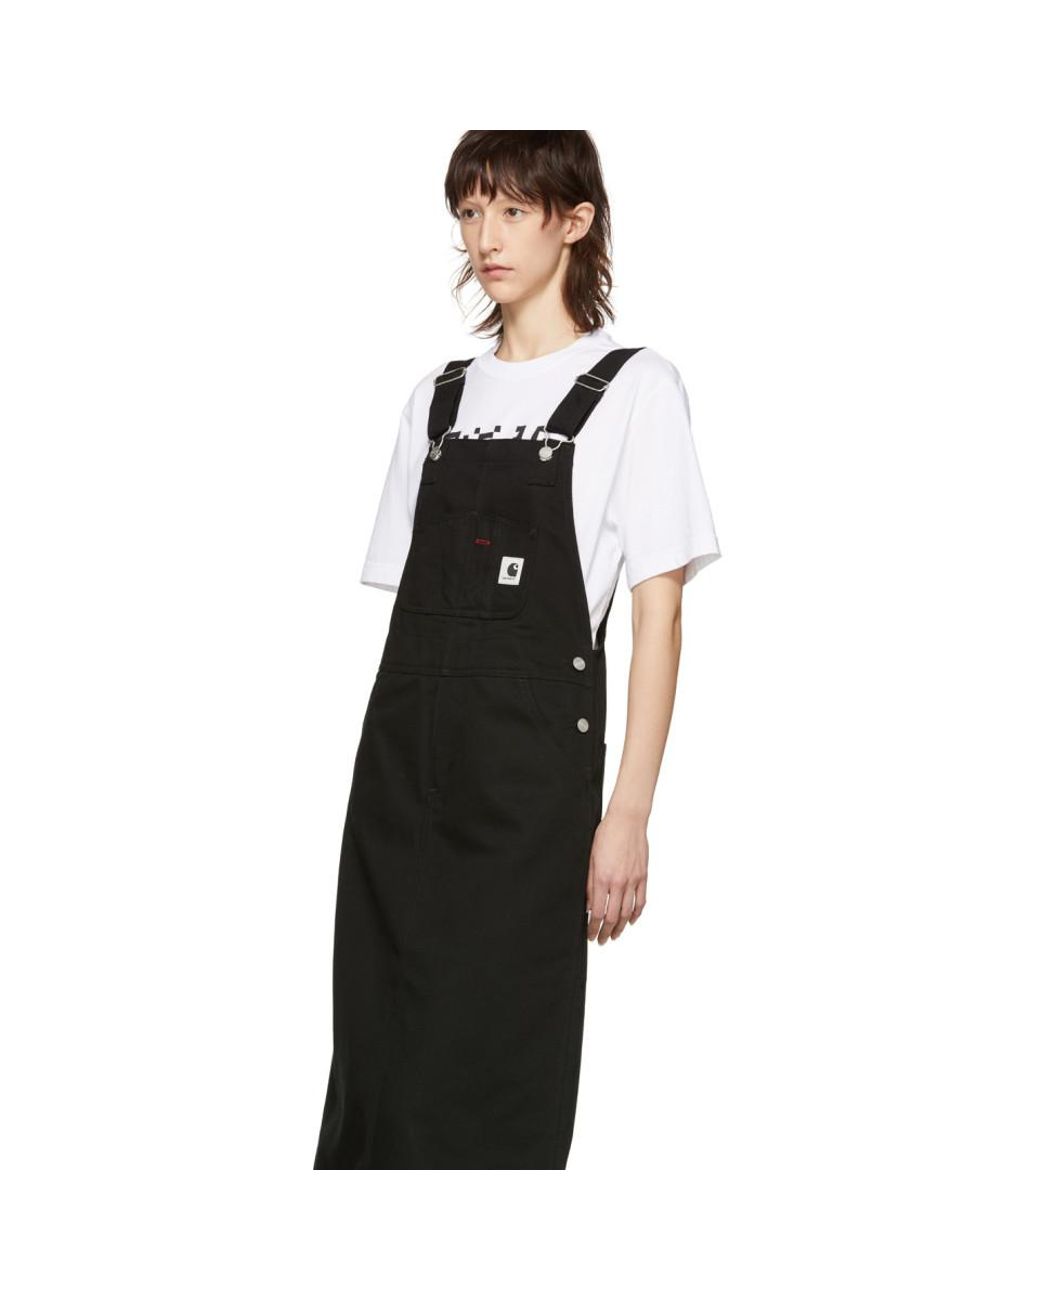 Carhartt WIP Black Bib Long Skirt Dress | Lyst